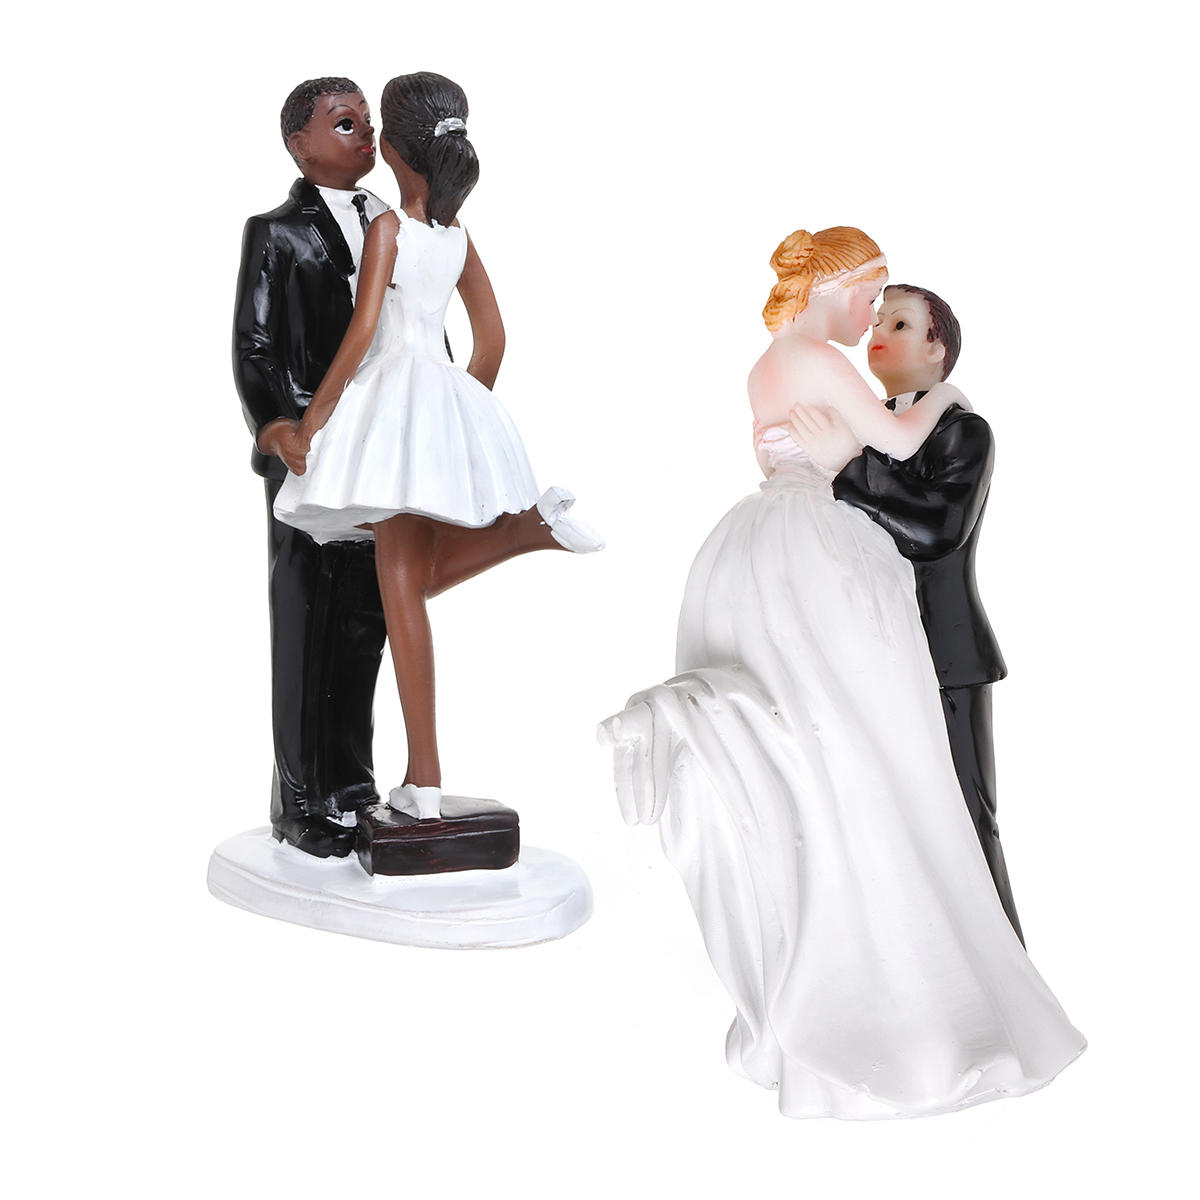 Romantic Funny Wedding Cake Topper Figure Bride Groom Couple Bridal Decorations